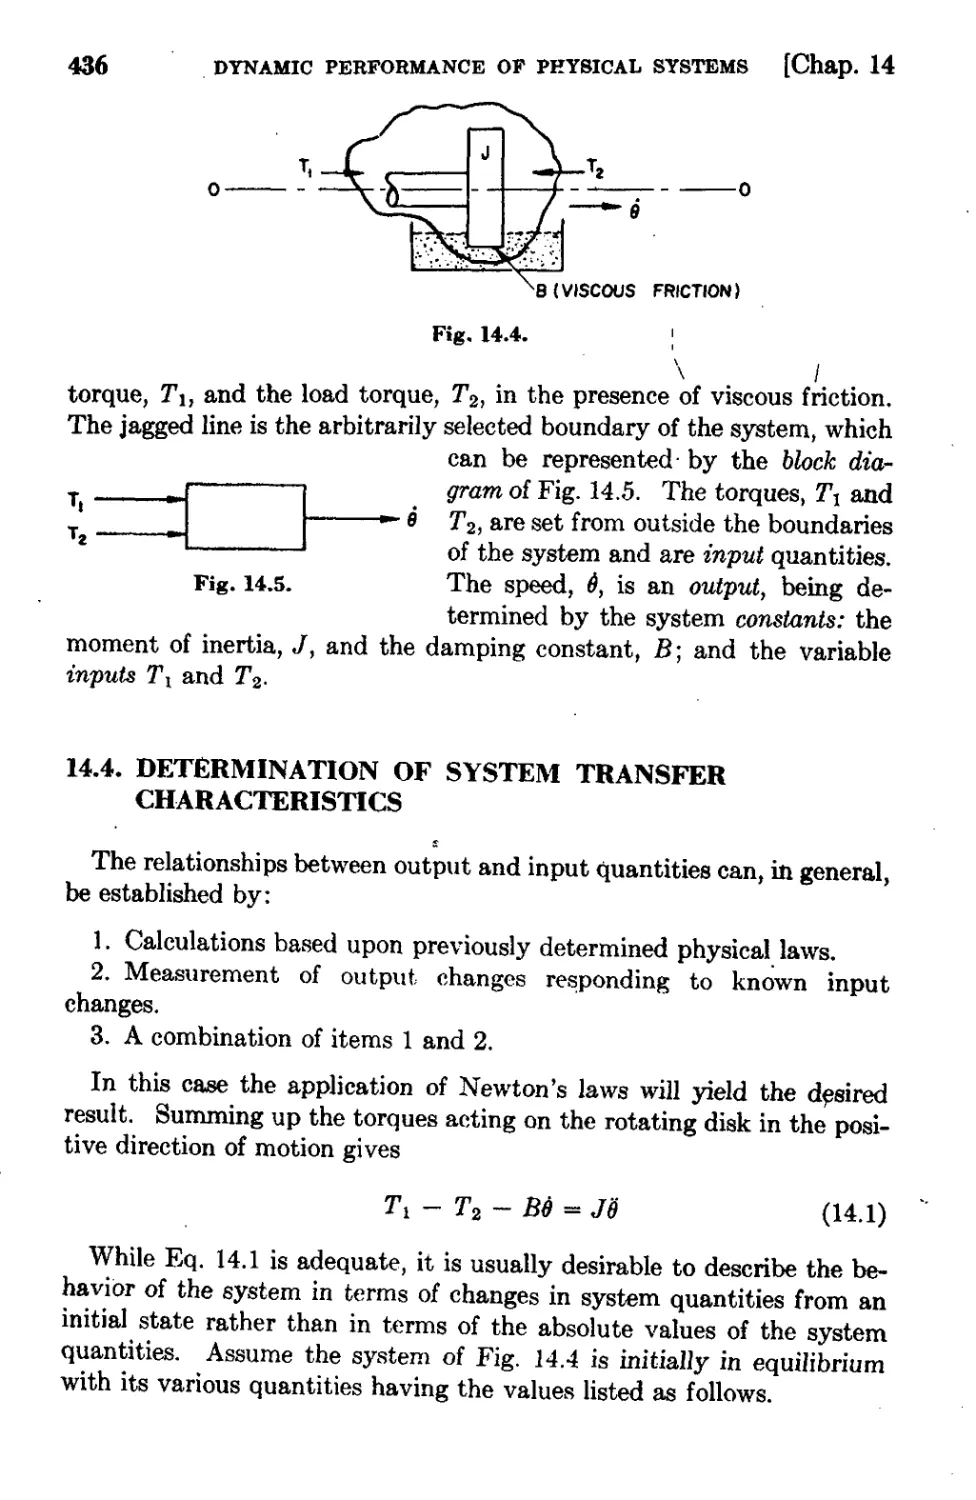 14.4 Determination of System Transfer Characteristics